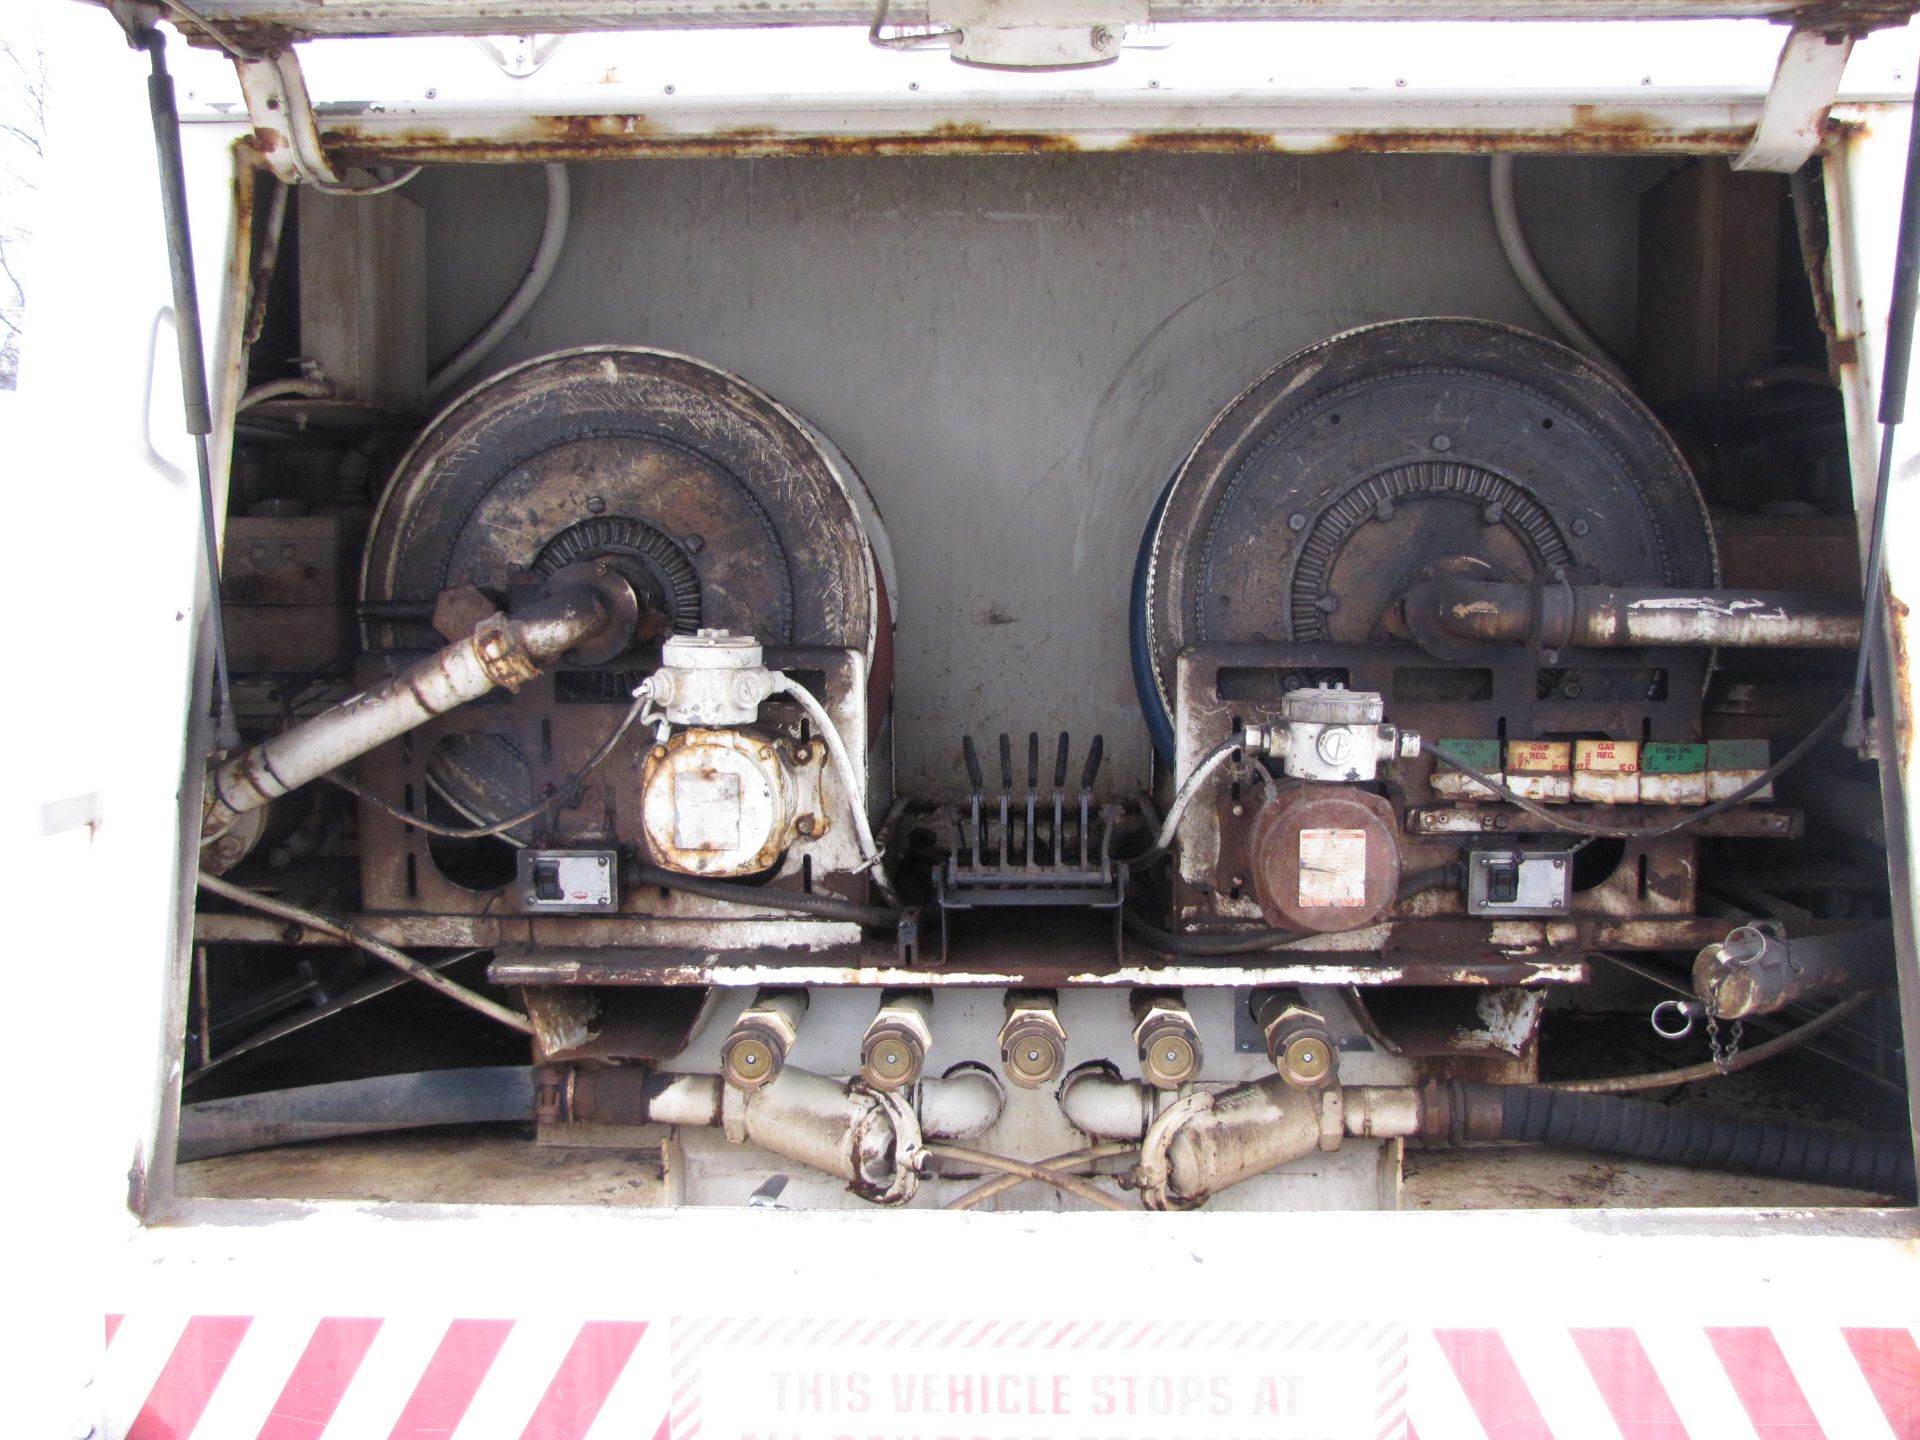 2007 International 4300 fuel truck - Image 30 of 73